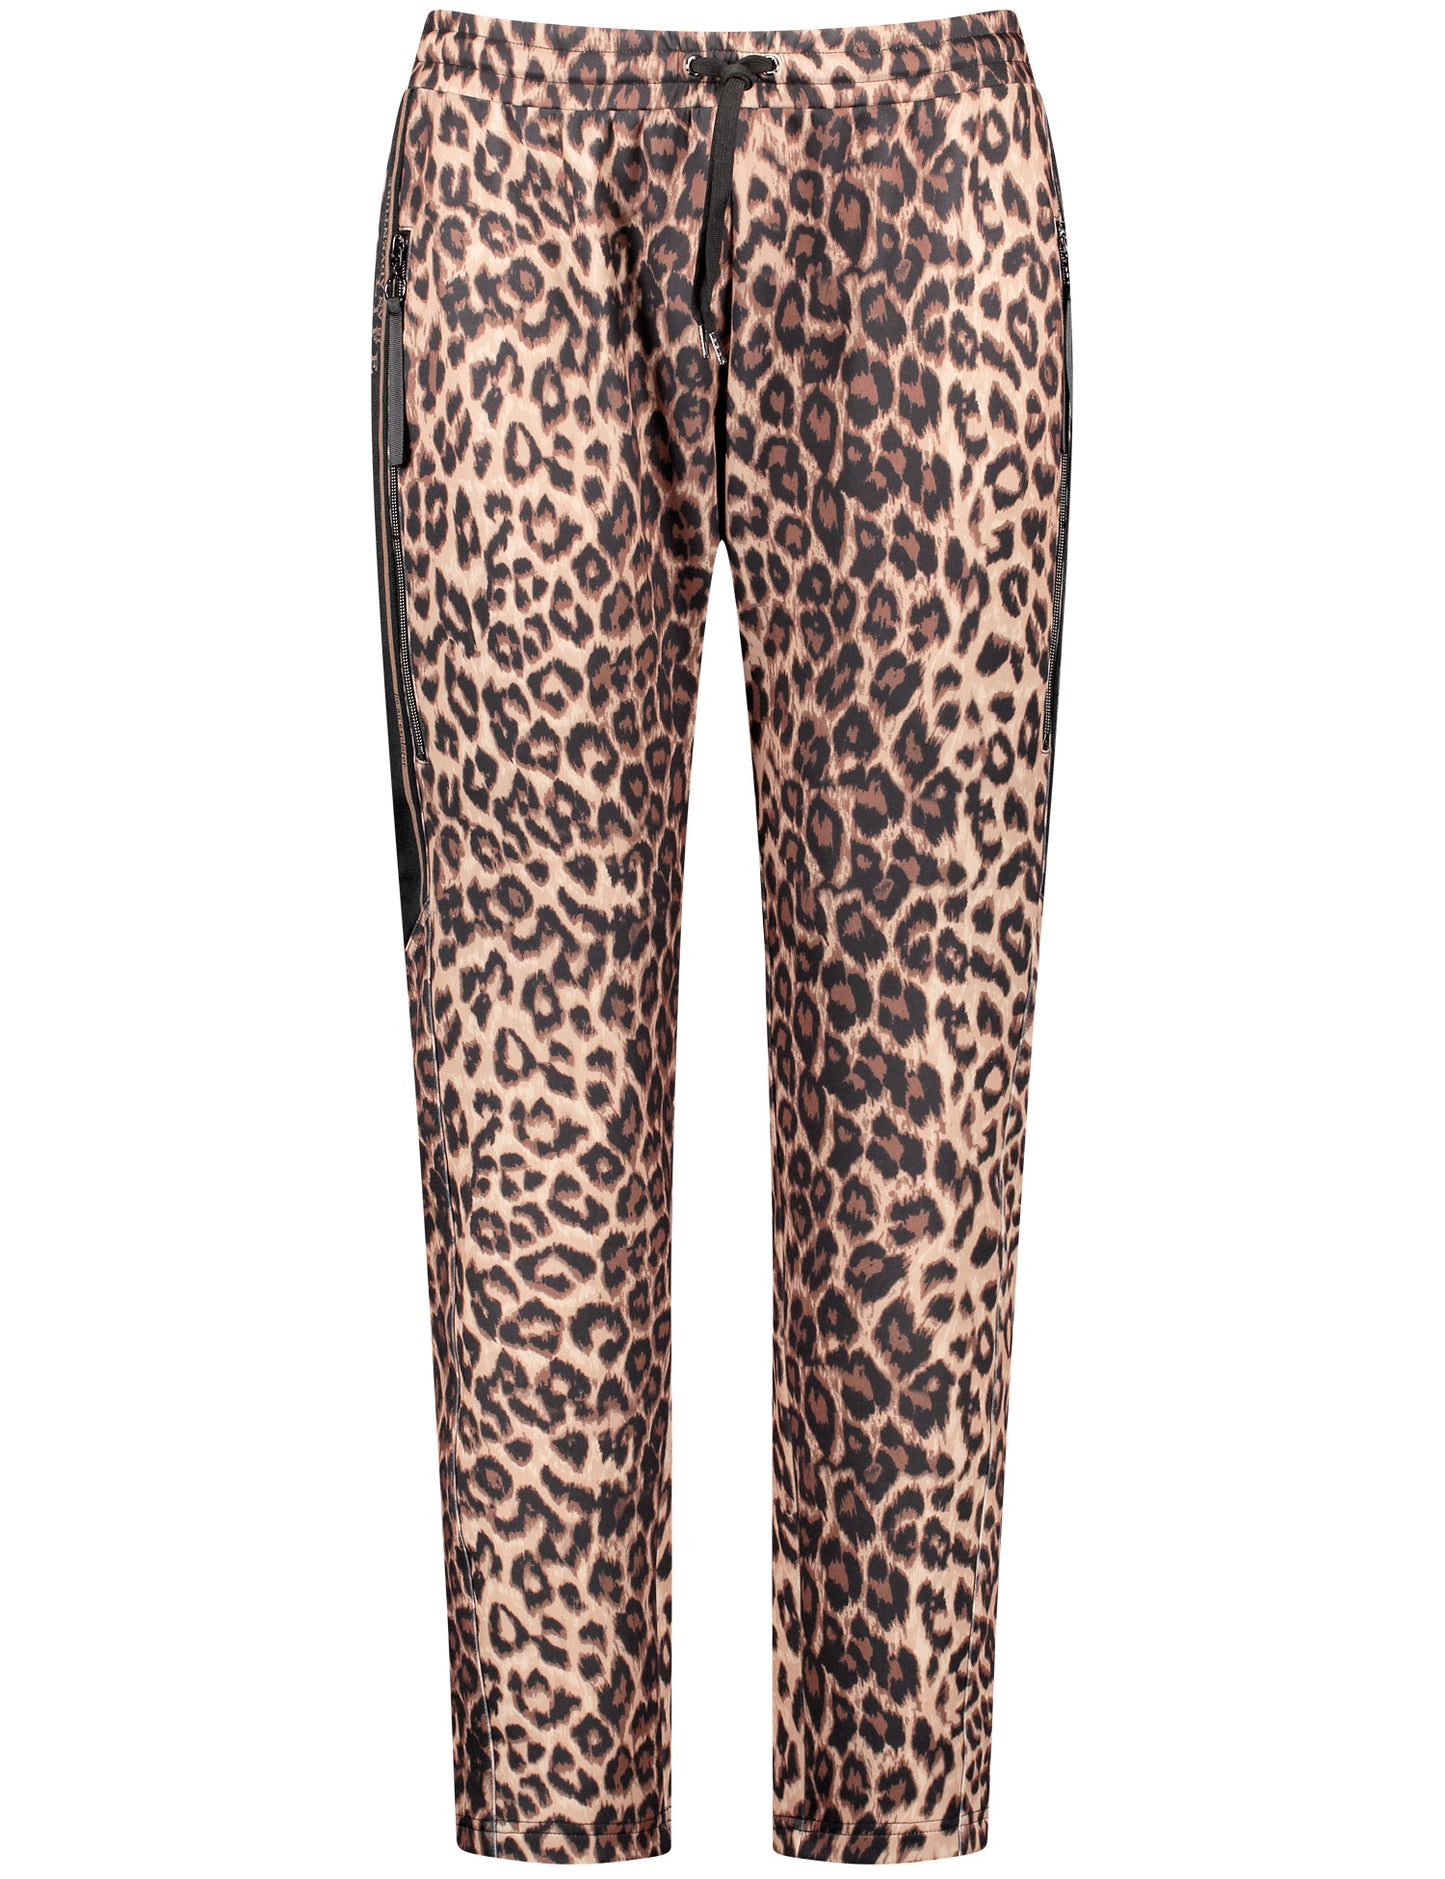 Jogging pants with a leopard design